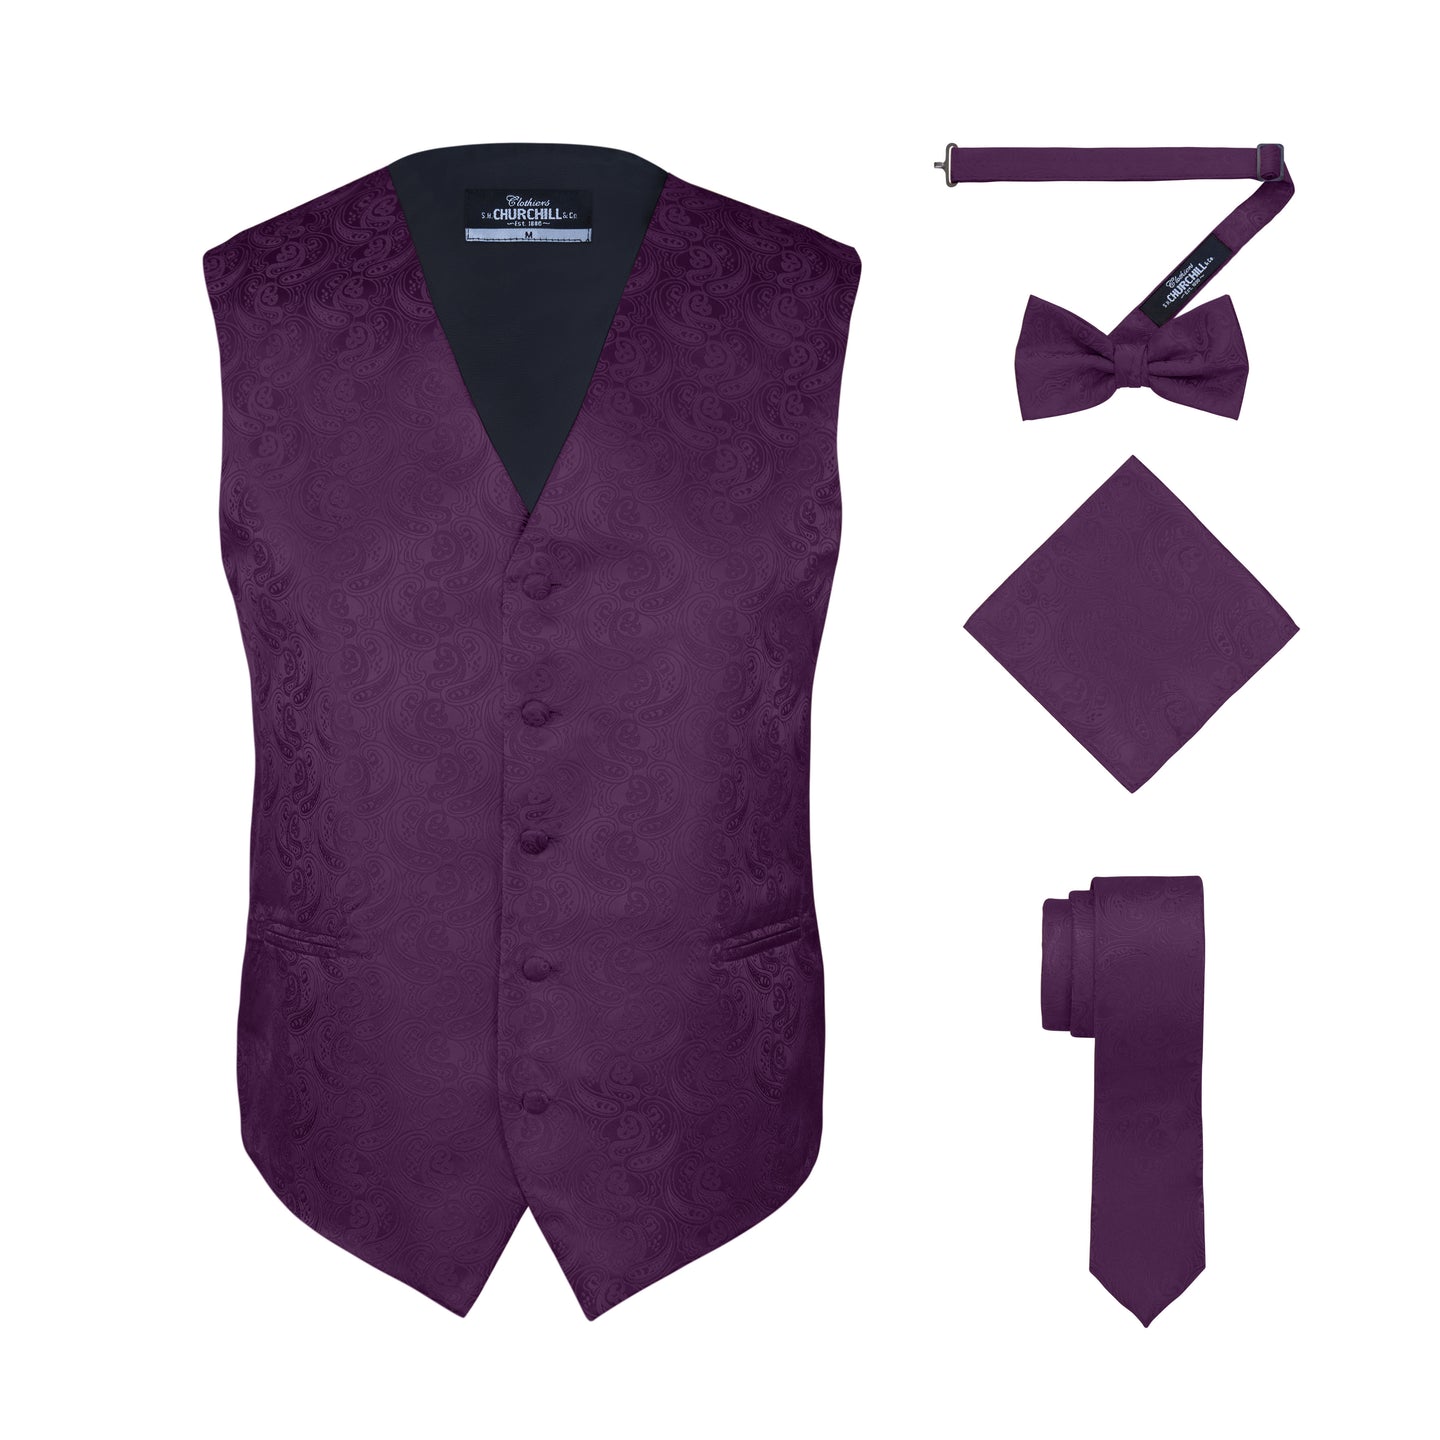 S.H. Churchill & Co. Men's Purple Paisley Vest Set, with Bow Tie, Neck Tie and Pocket Hanky